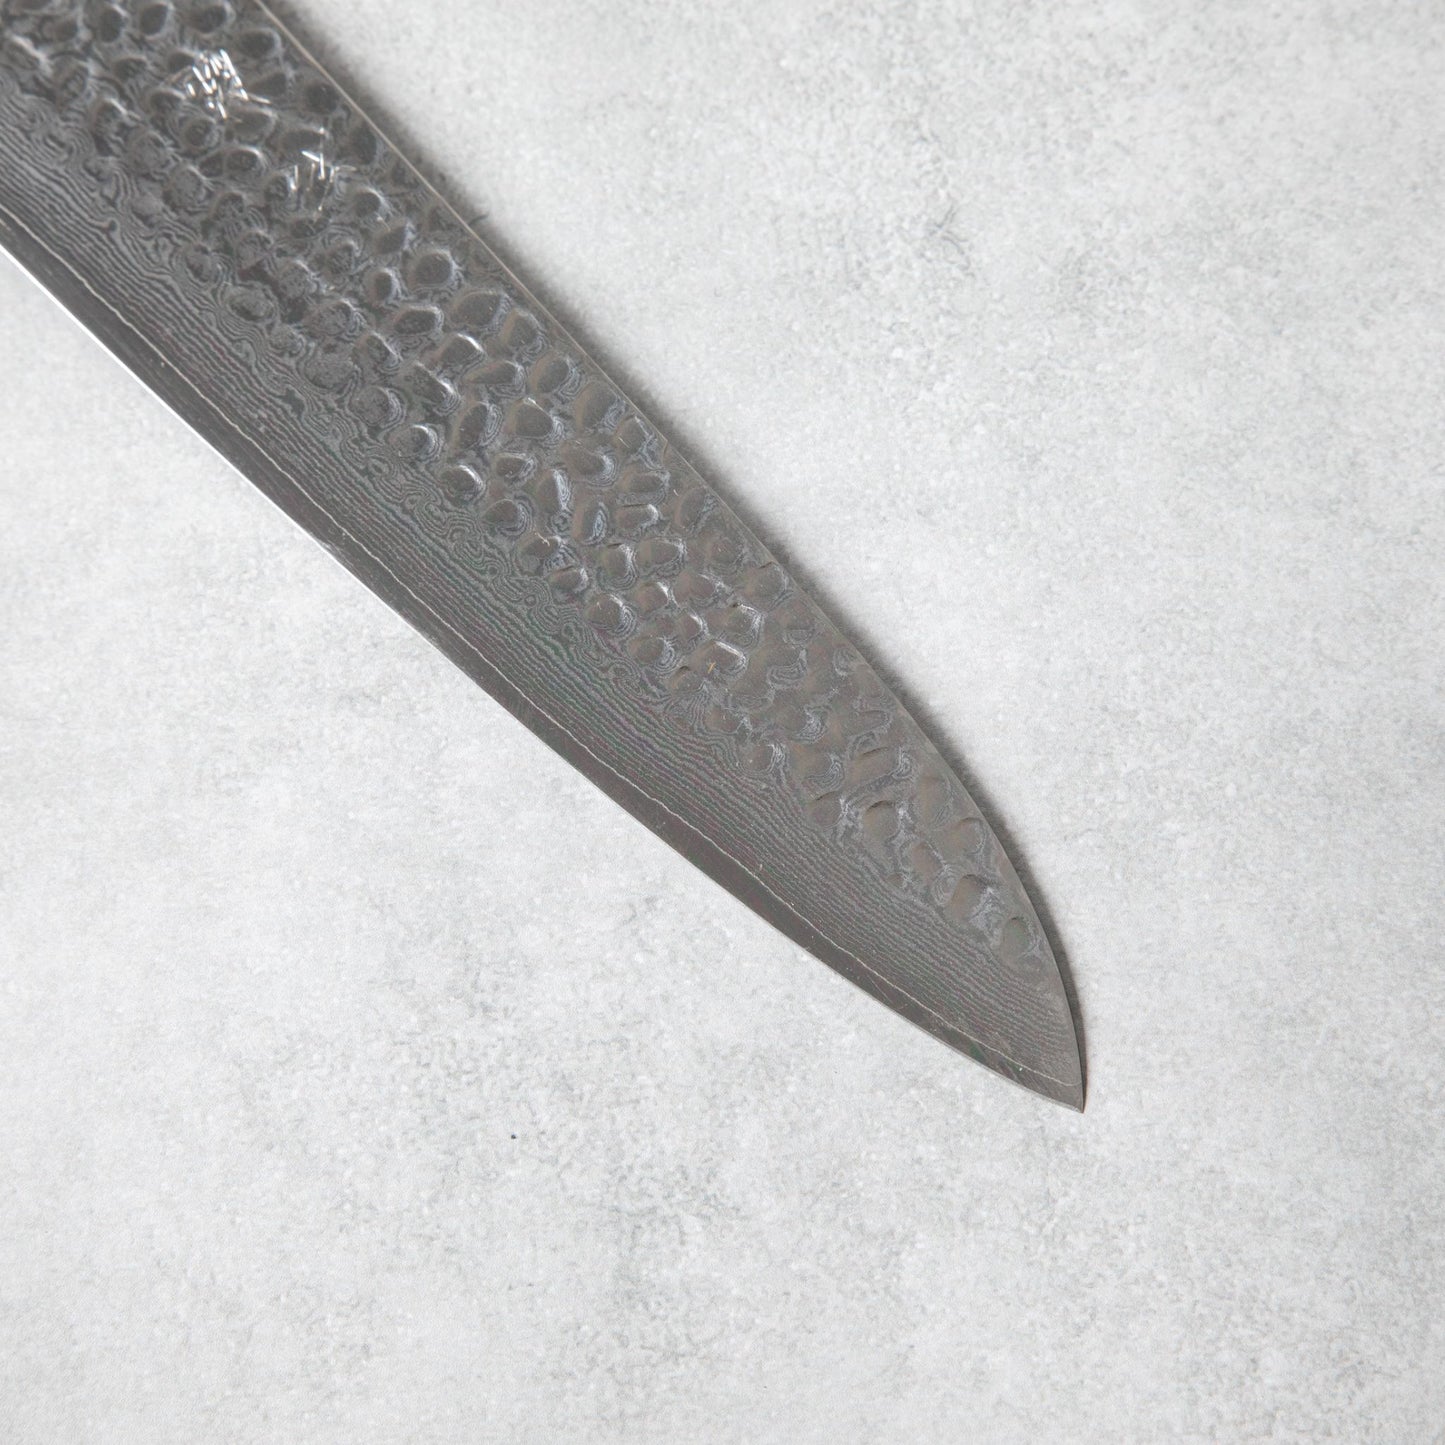 Ishizuchi VG10 Tsuchime Damascus Chef Knife Rosewood Handle